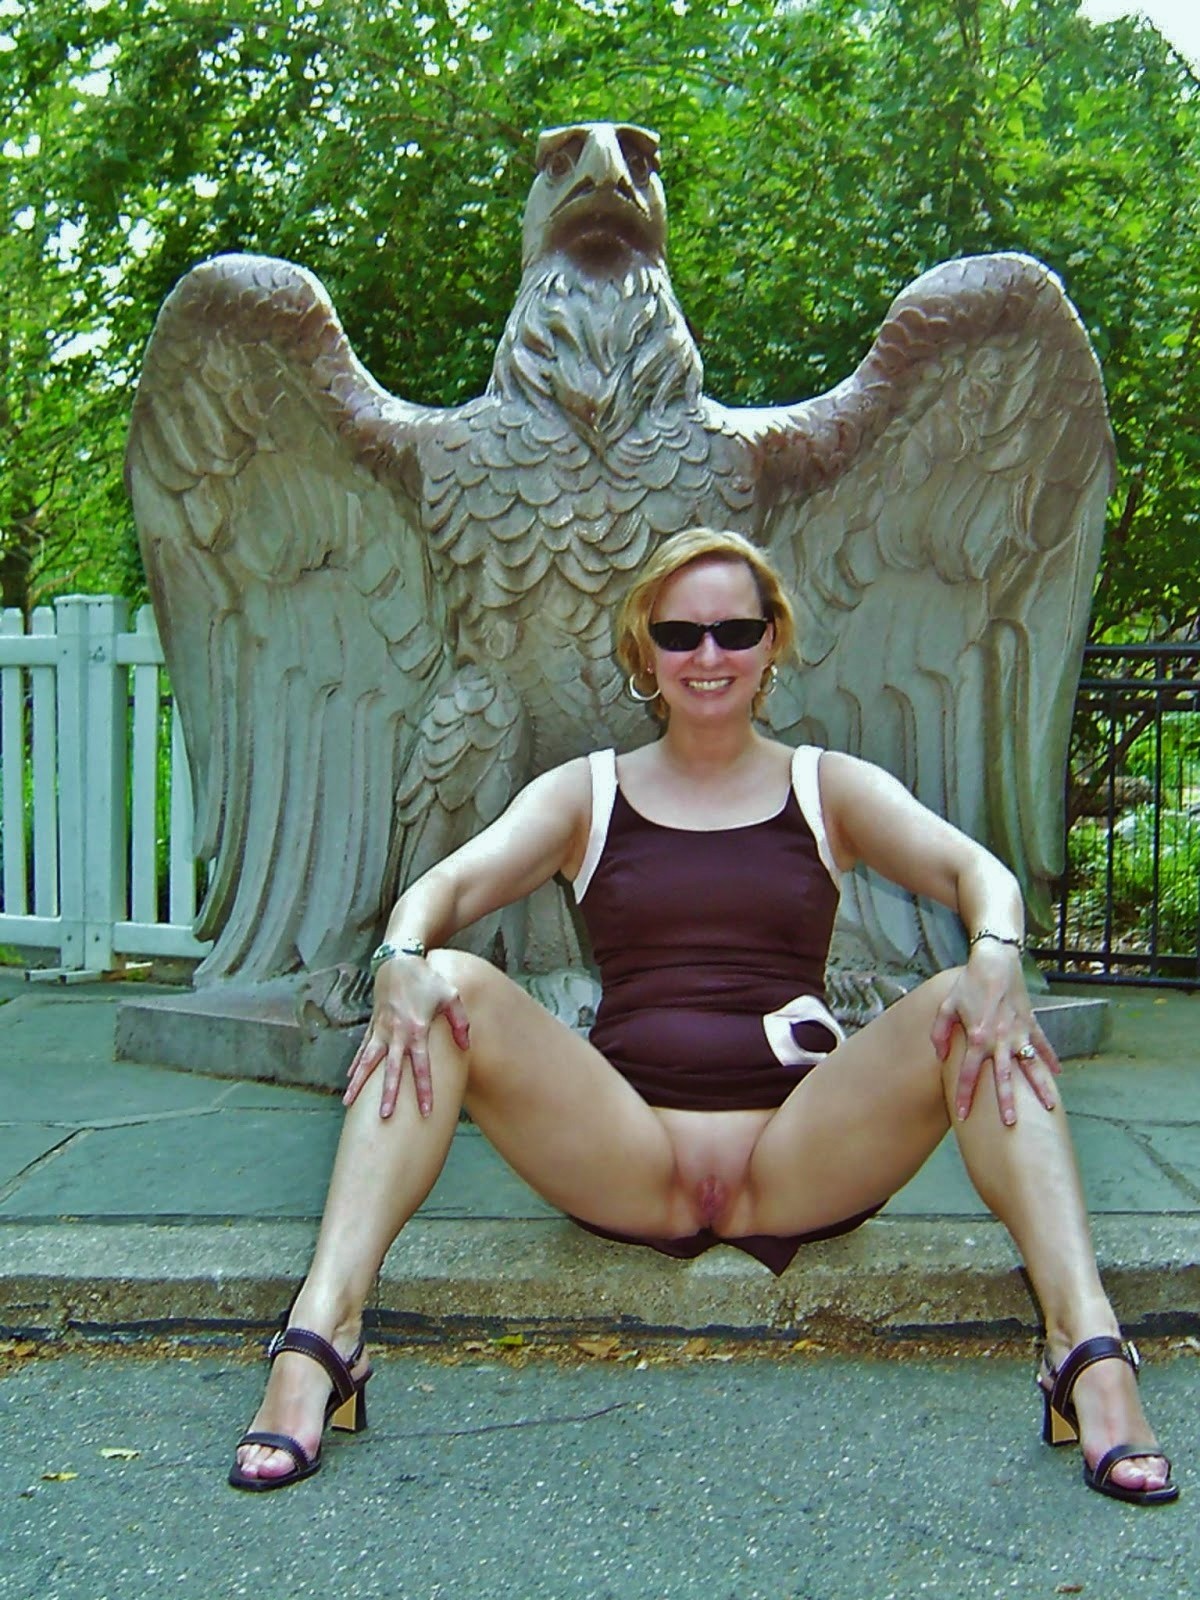 Hot nude girls spread eagle